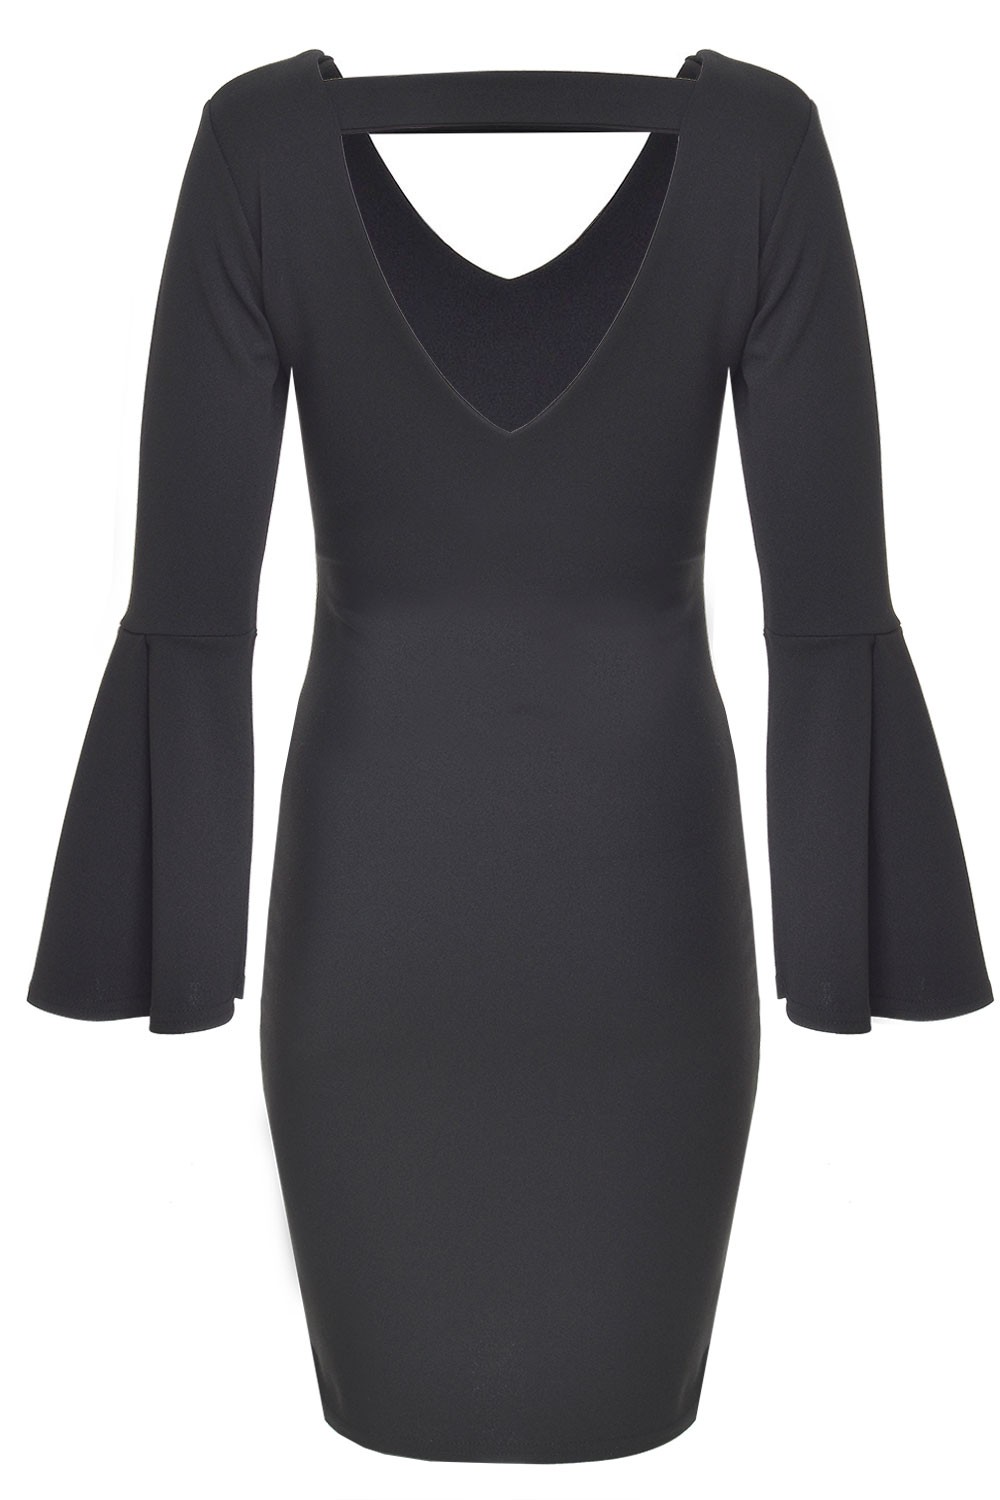 Premier De Toi Zara Bell Sleeve Bodycon Dress in Black | iCLOTHING